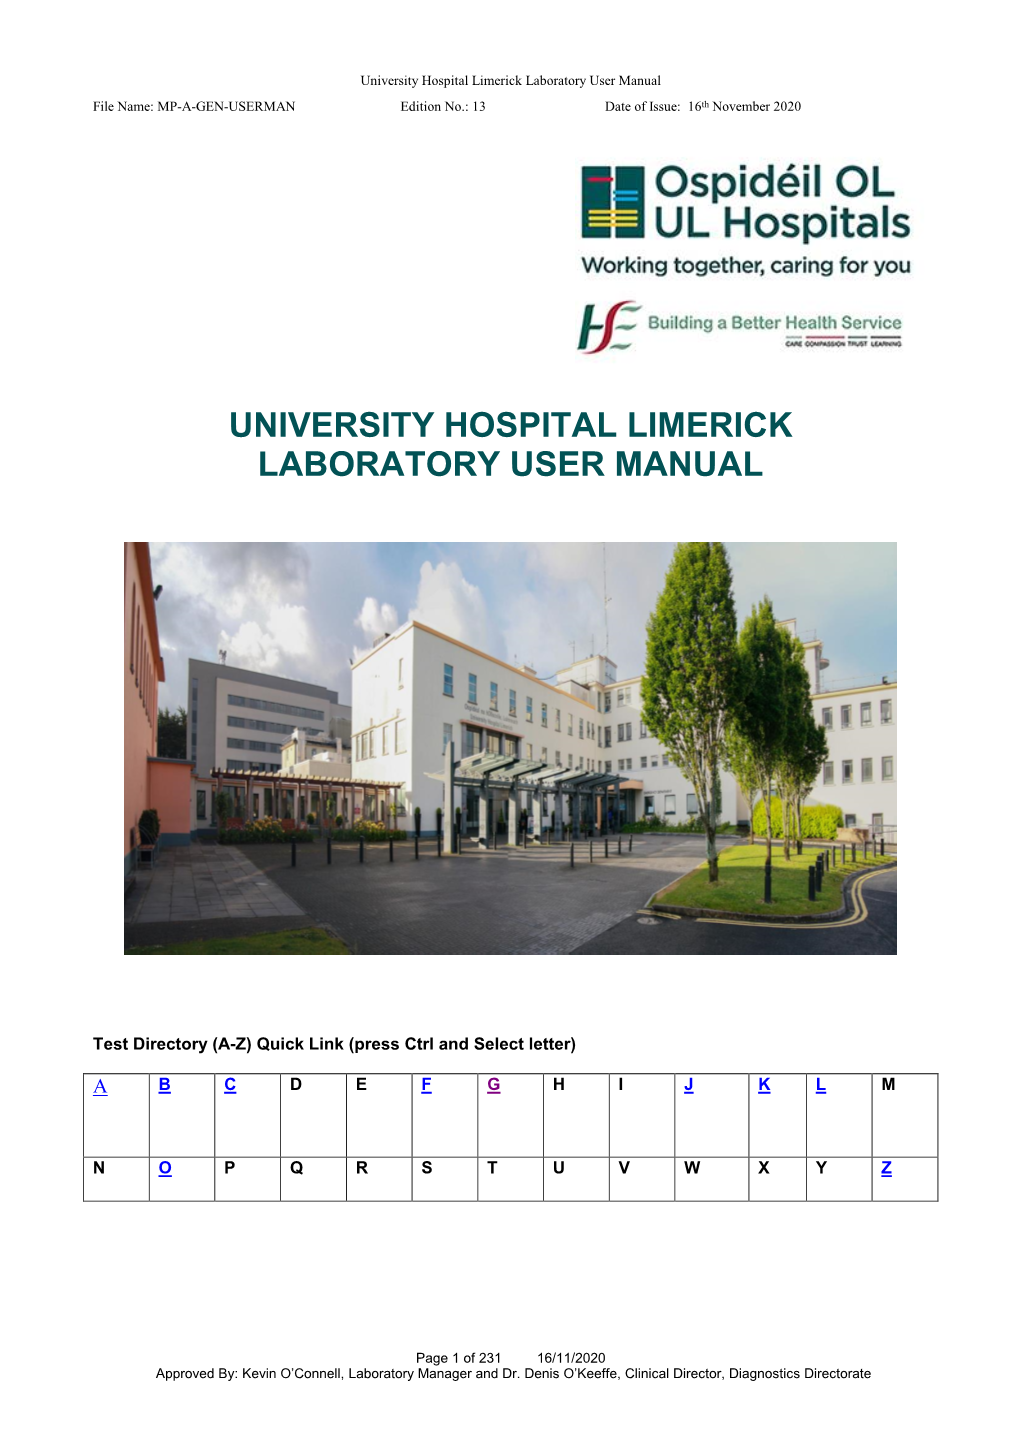 University Hospital Limerick Laboratory User Manual, Edition 13